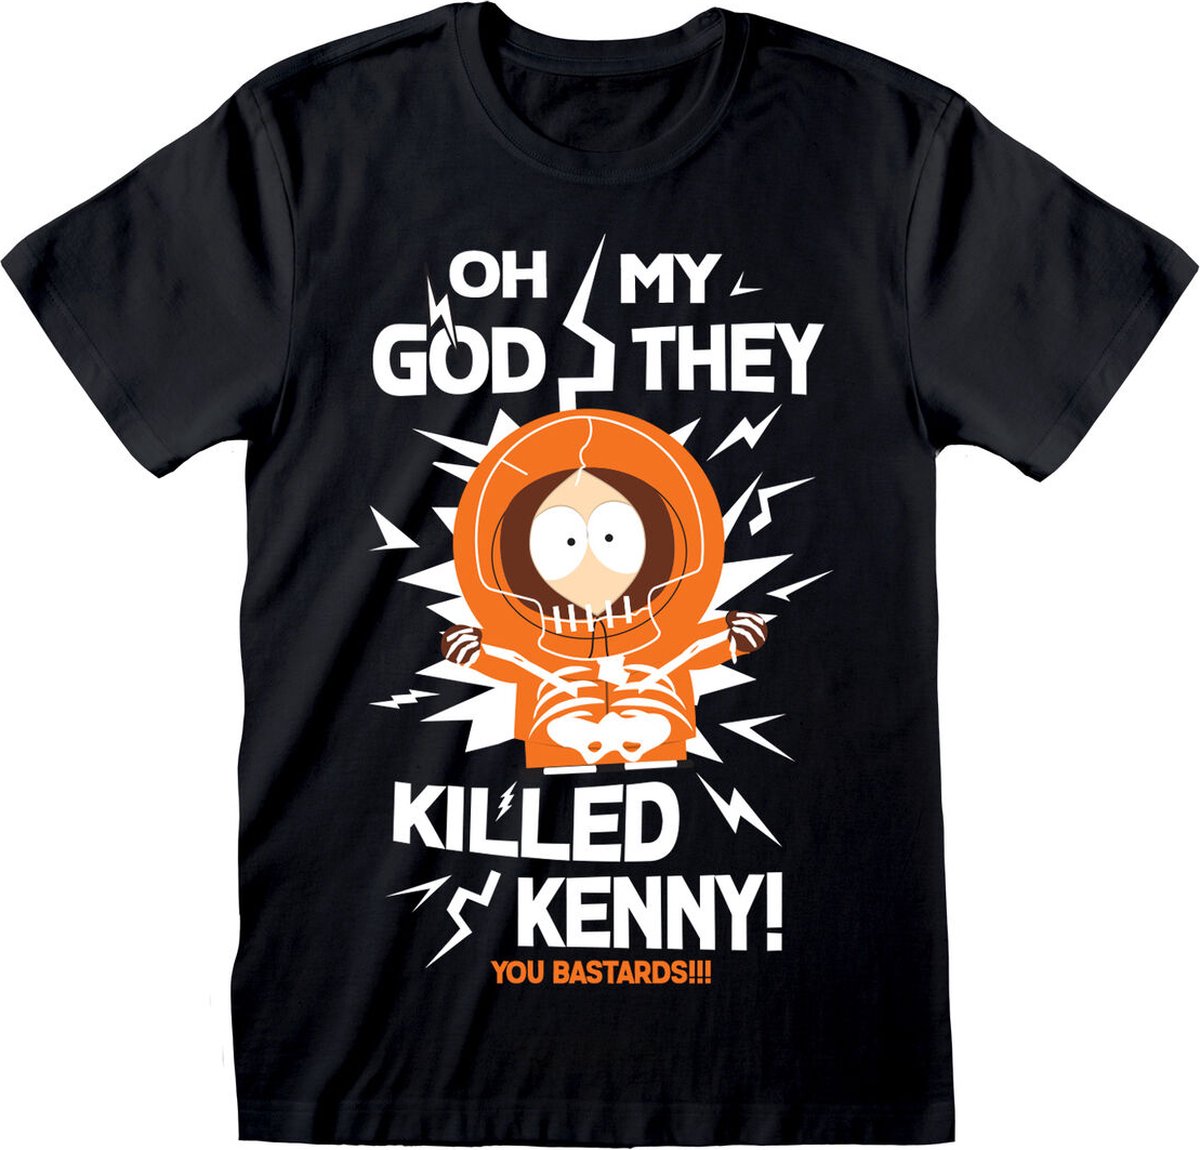 T-Shirt met Korte Mouwen South Park They Killed Kenny Zwart Uniseks - M